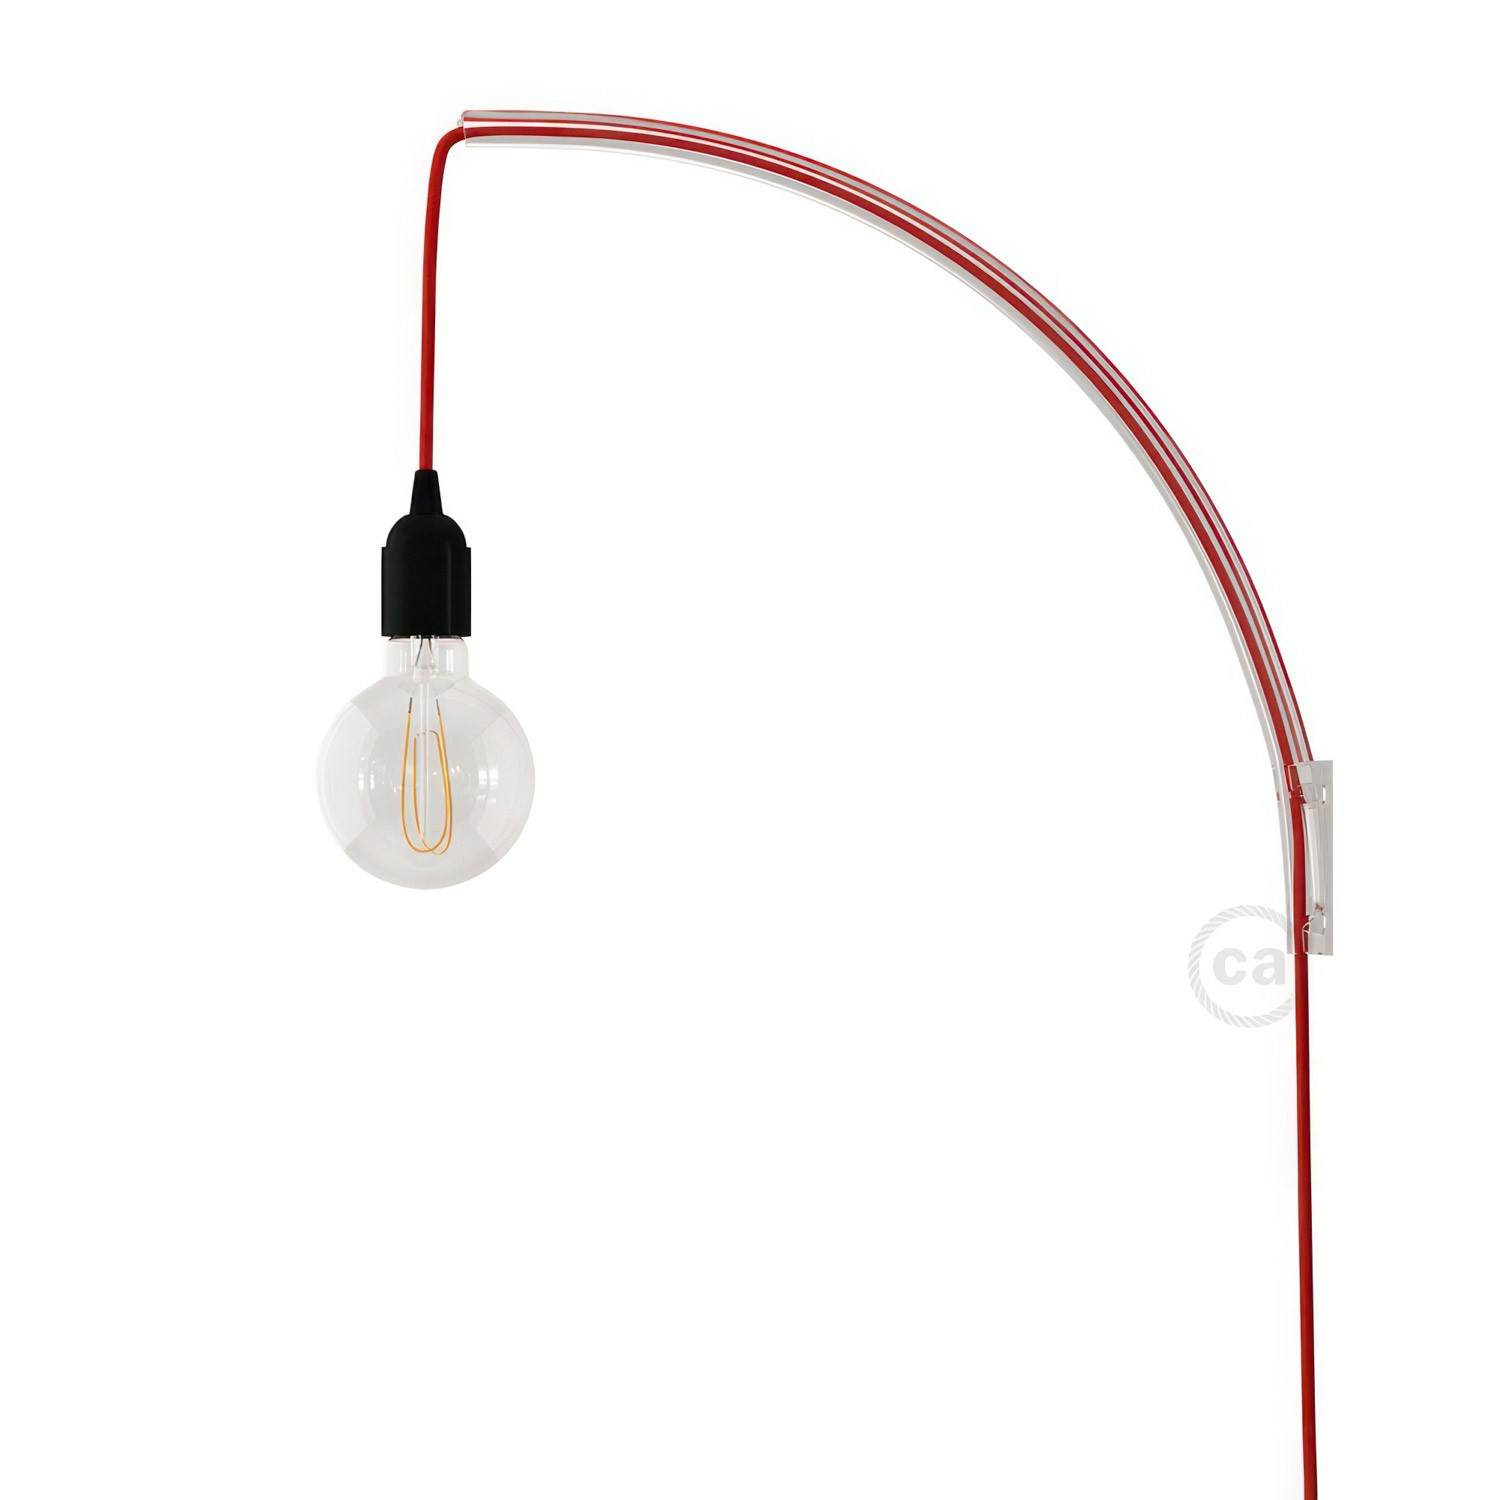 Archet(To), prozirni zidni držač za lampu.